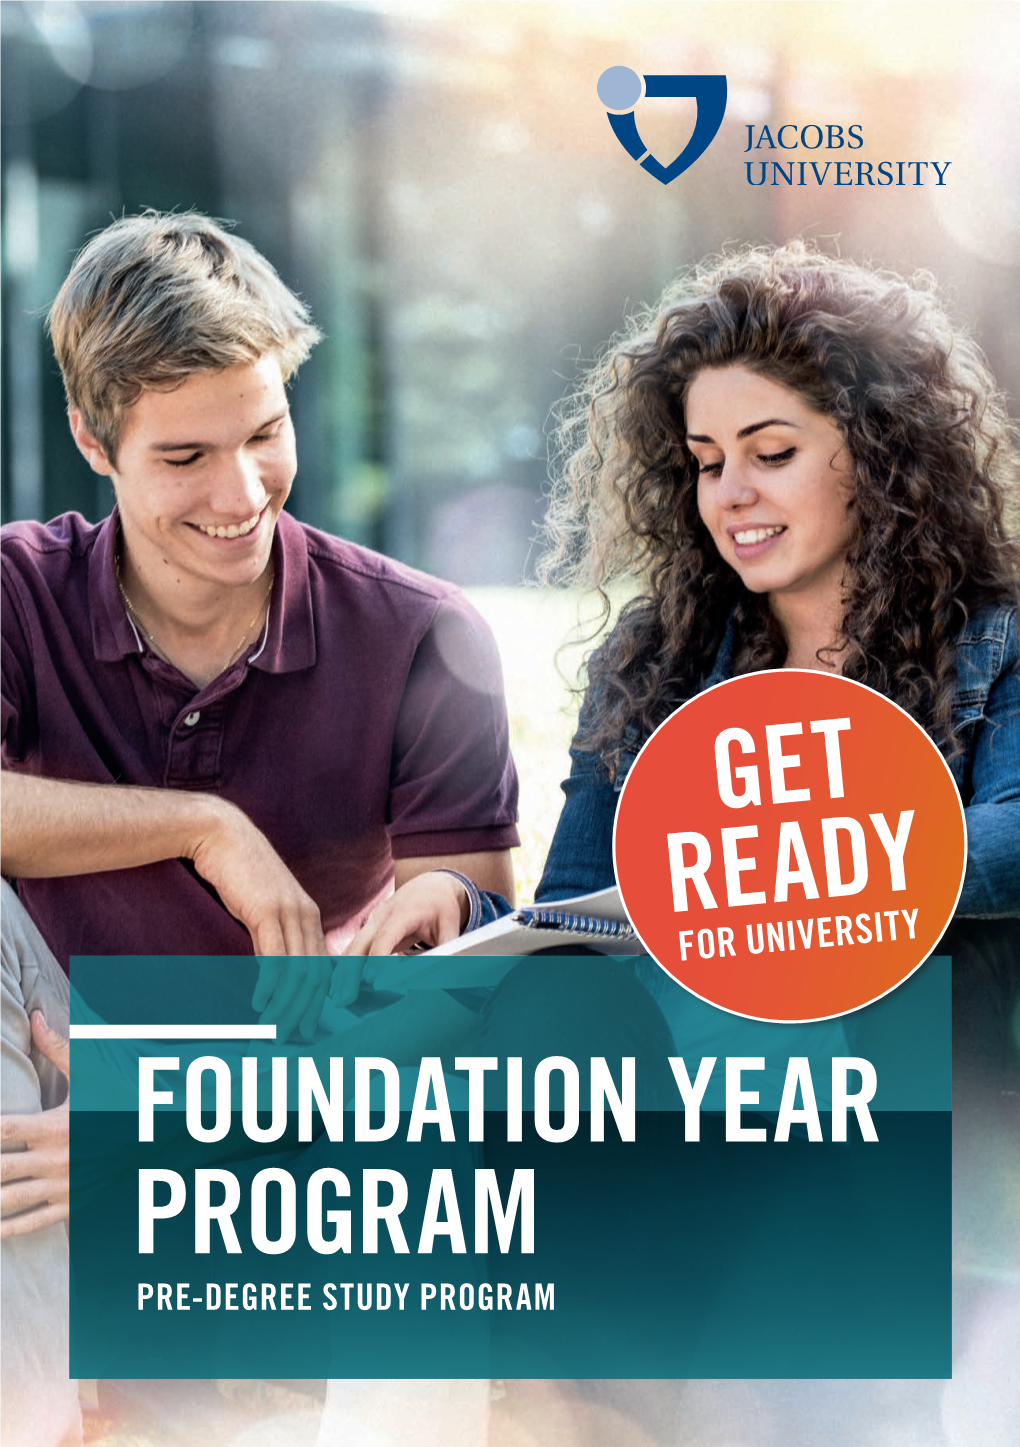 Foundation Year Program Pre-Degree Study Program the Program